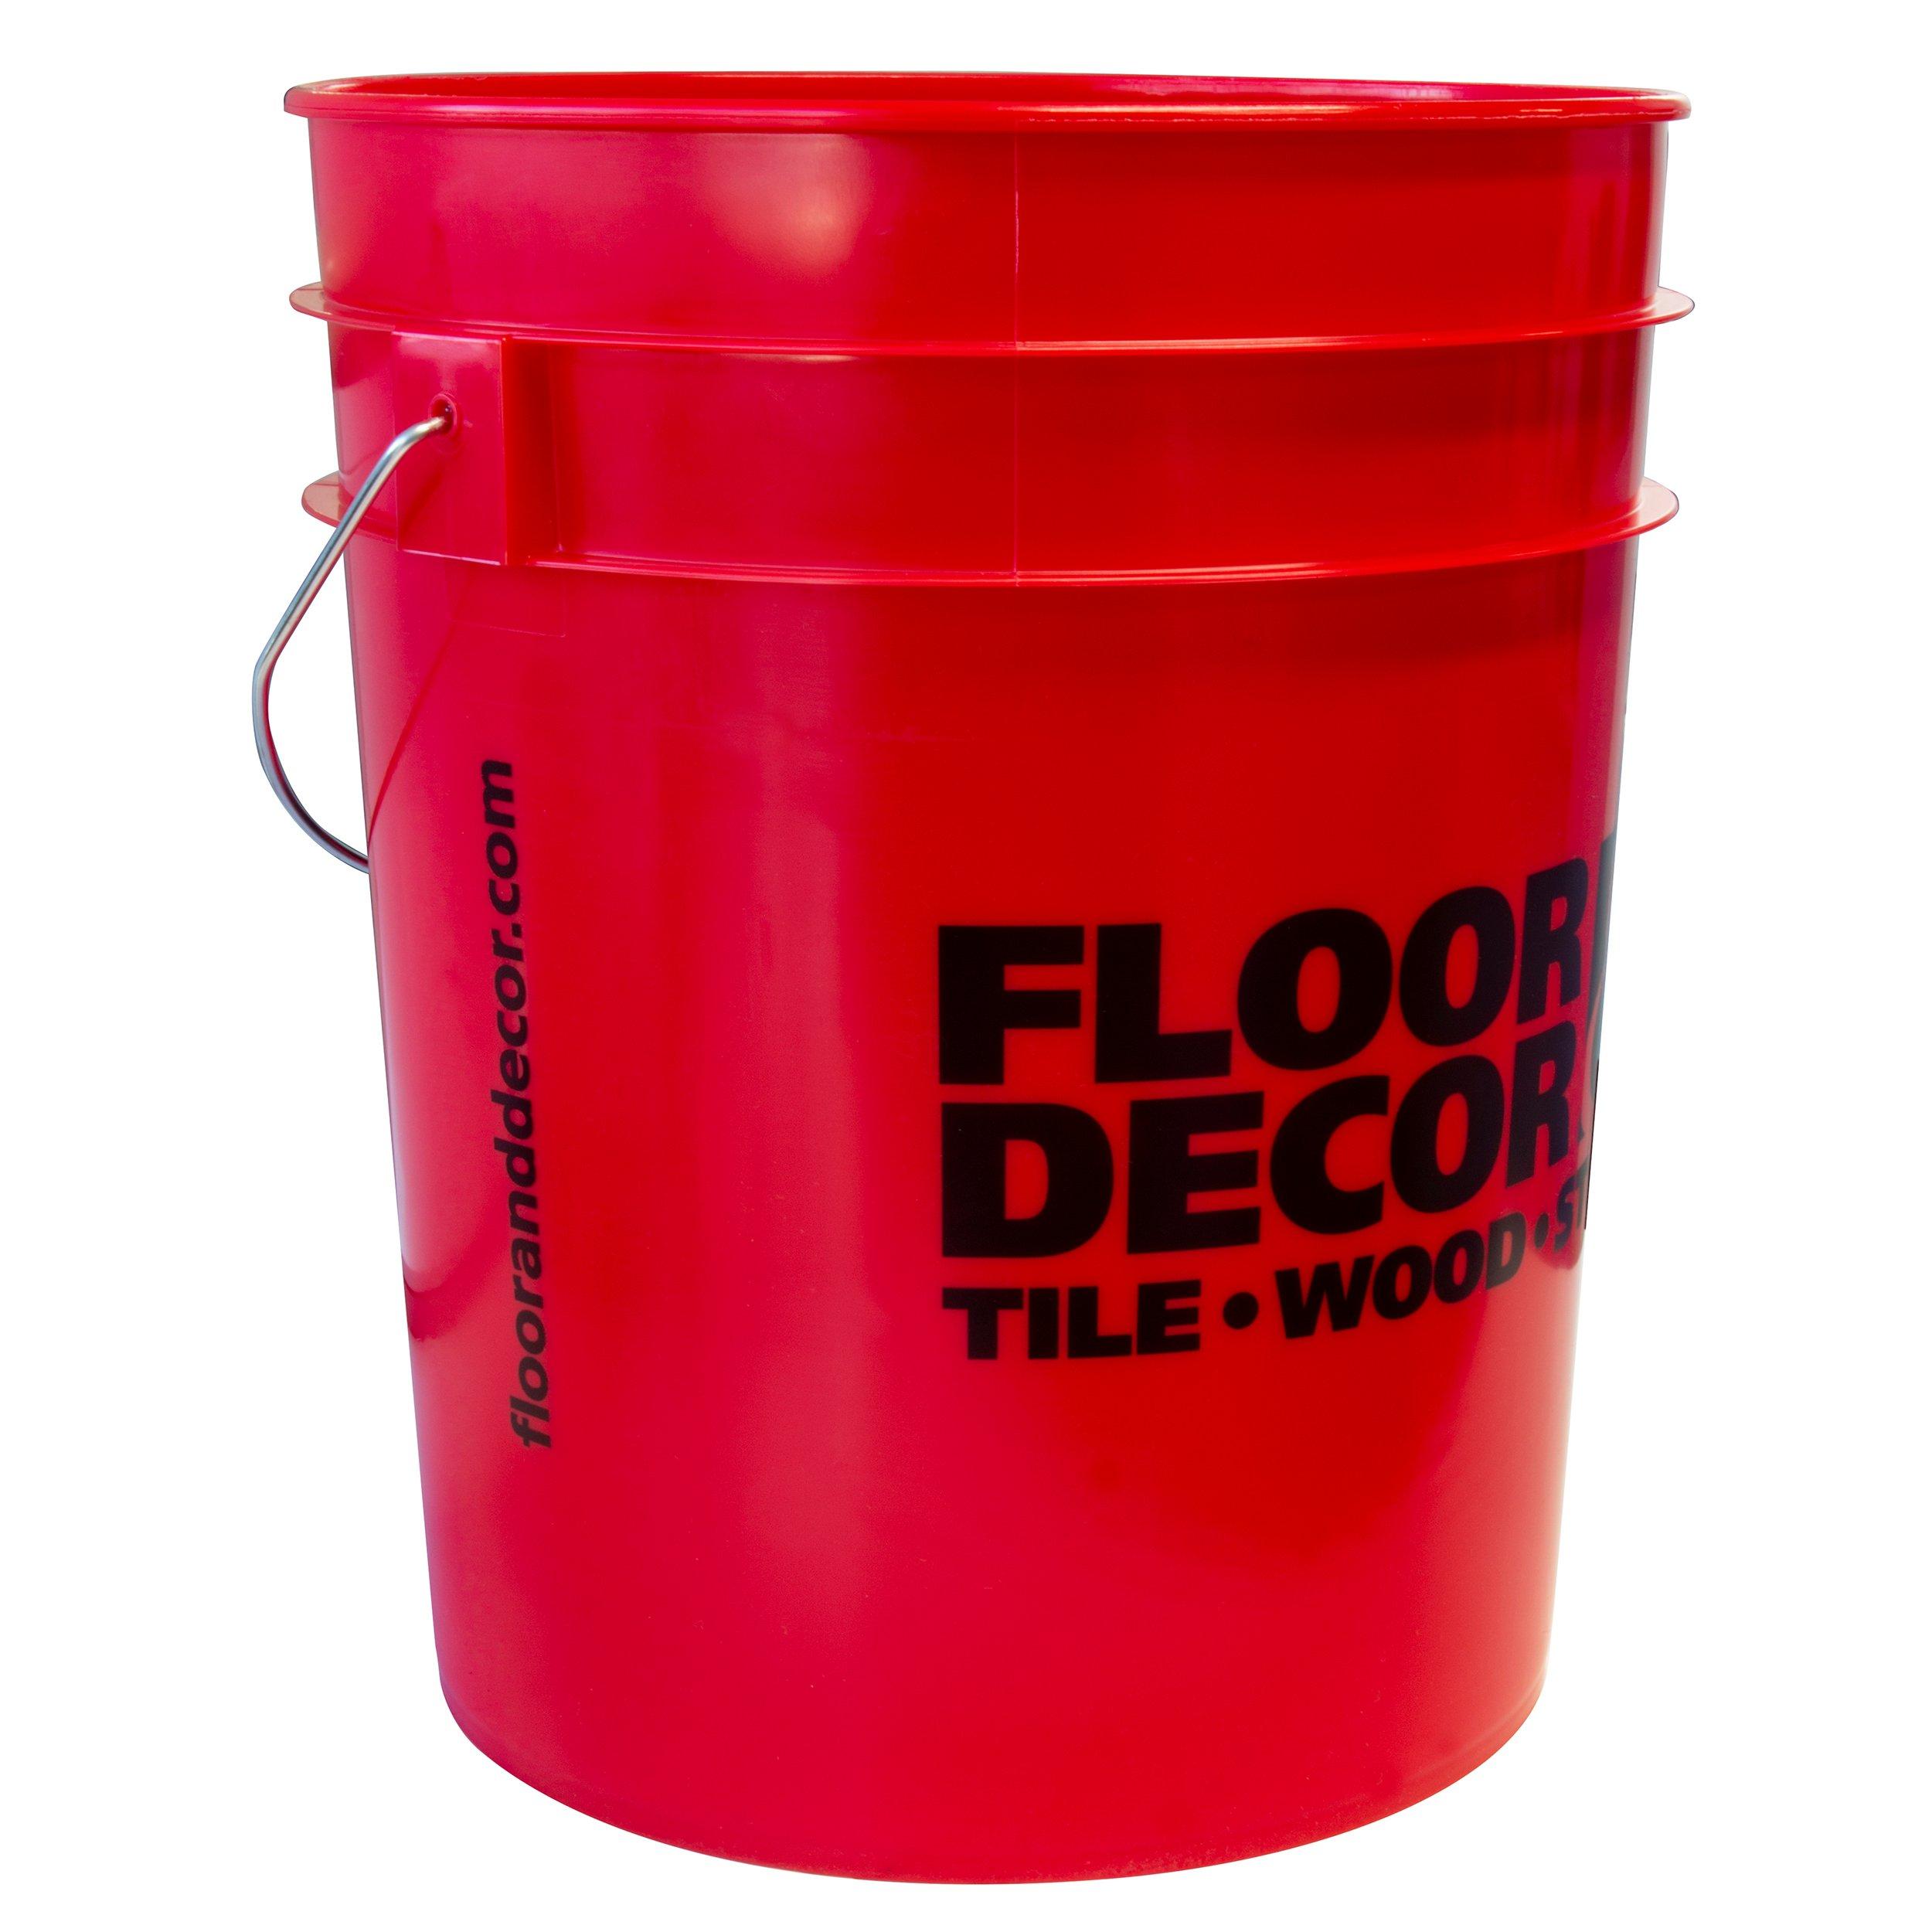 Floor and Decor Logo Red Bucket